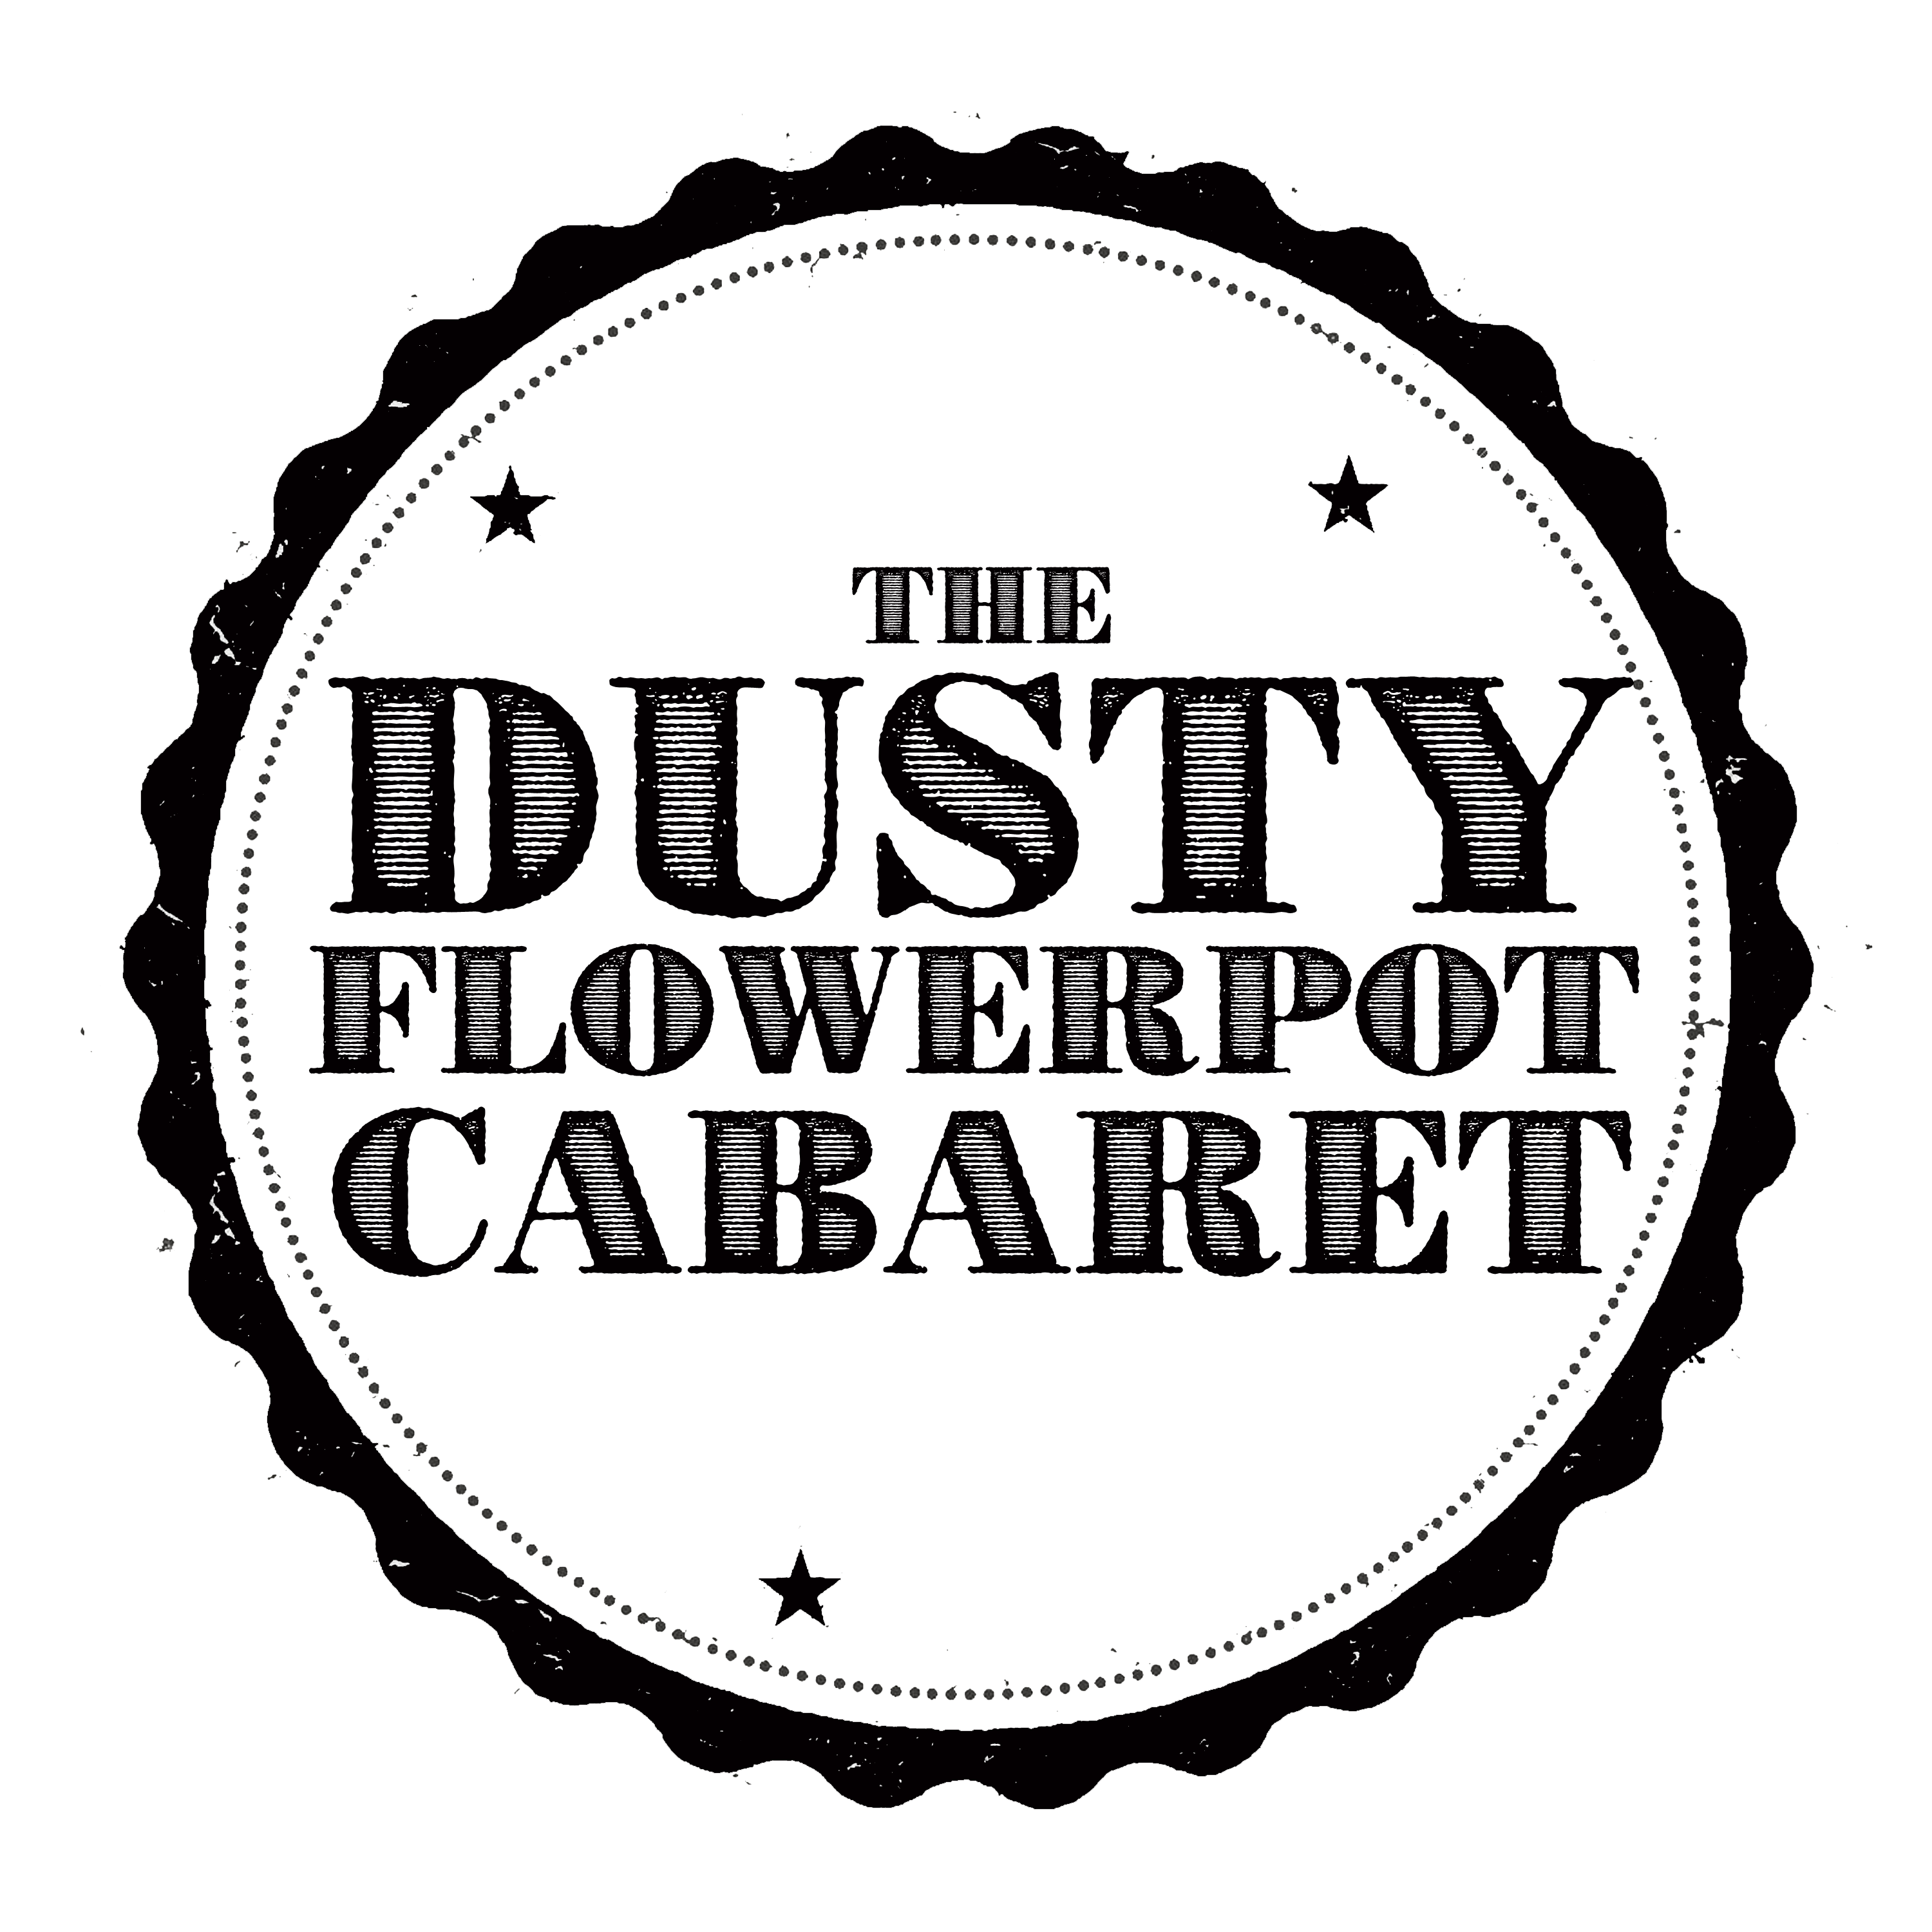 Dusty Flowerpot Cabaret